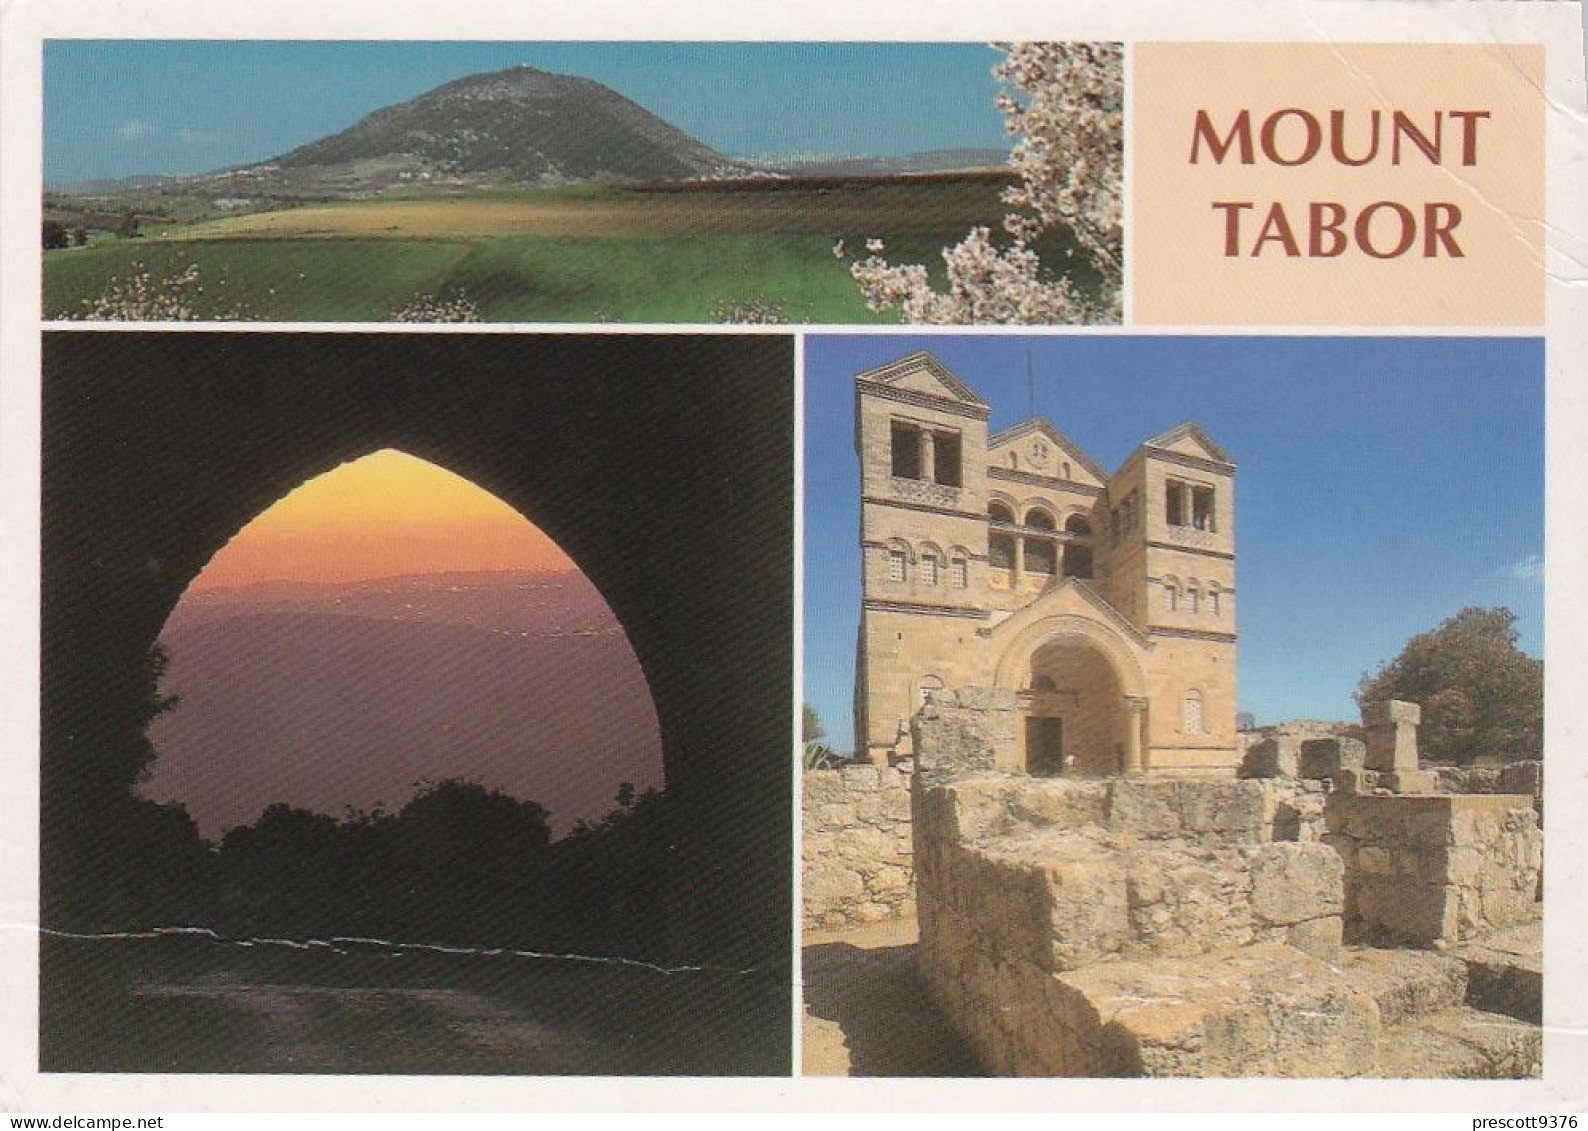 Mount Tabor, Multiview, Jerusalem -   Unused Postcard   - L Size 17x12Cm - LS4 - Israel